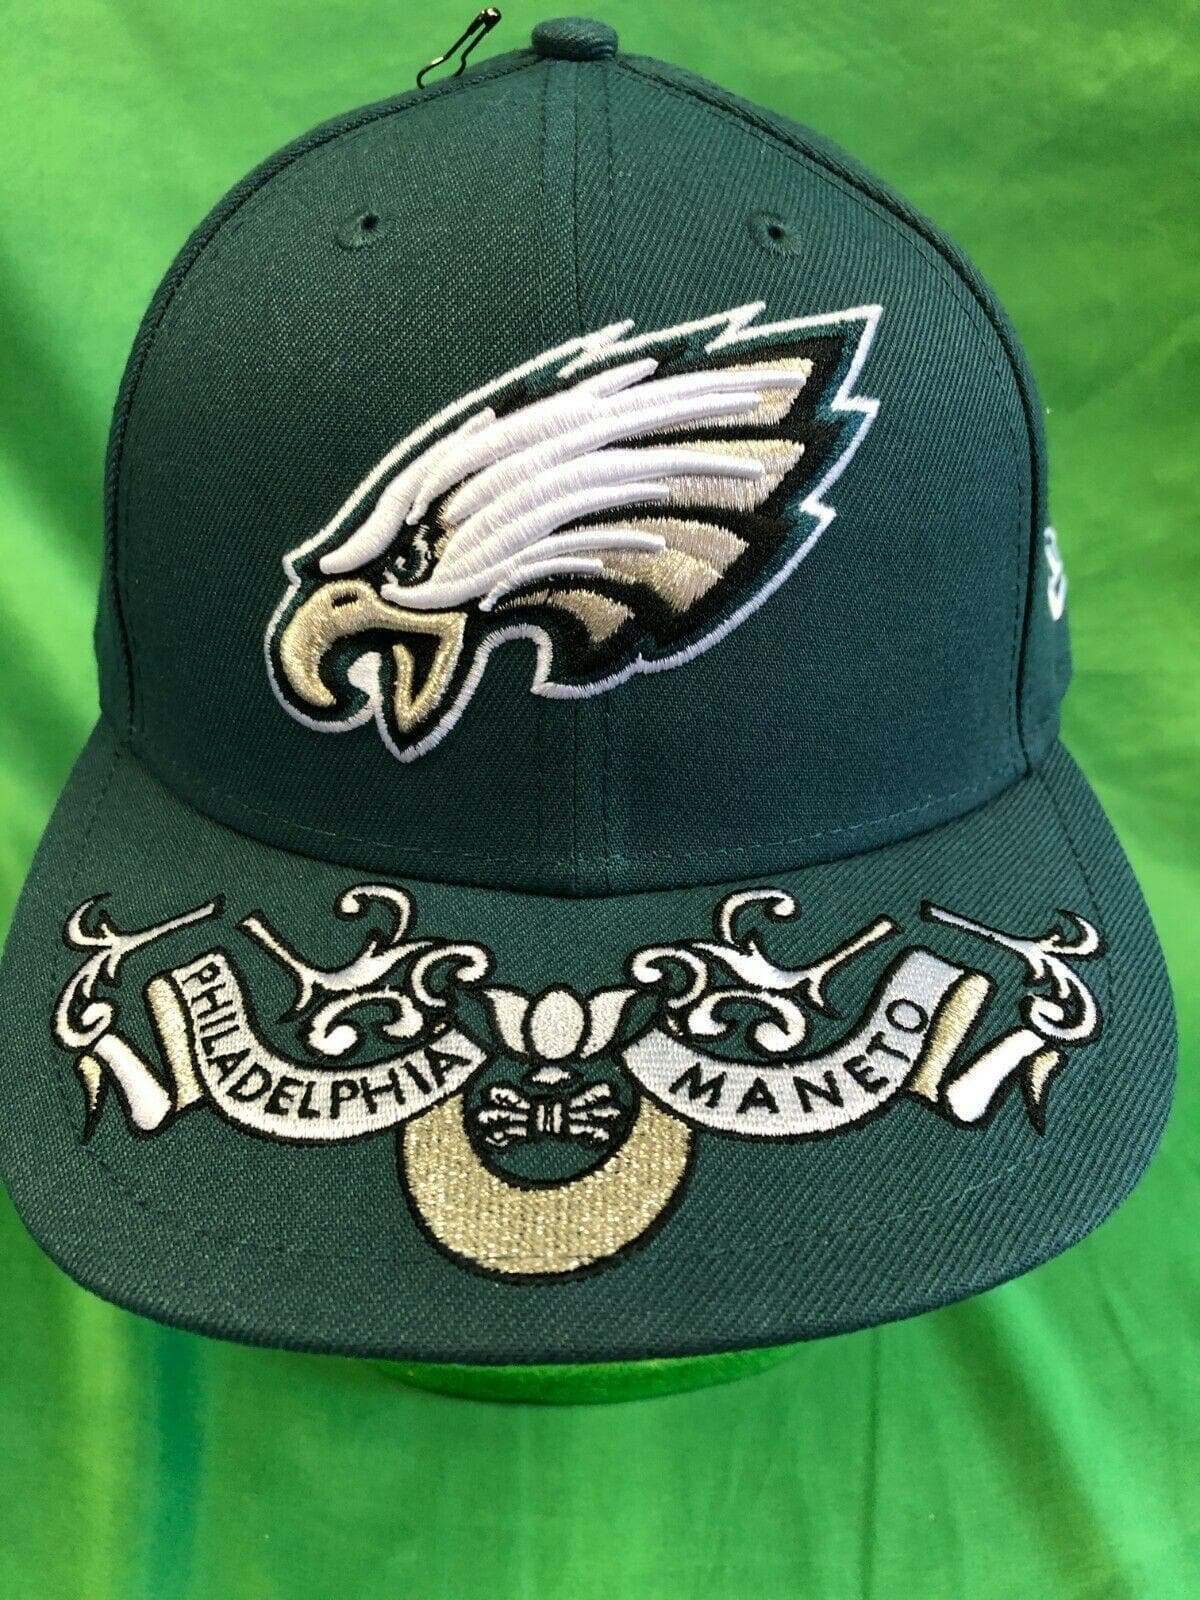 NFL Philadelphia Eagles New Era 59FIFTY 2019 Draft Hat/Cap NWT 7-5/8